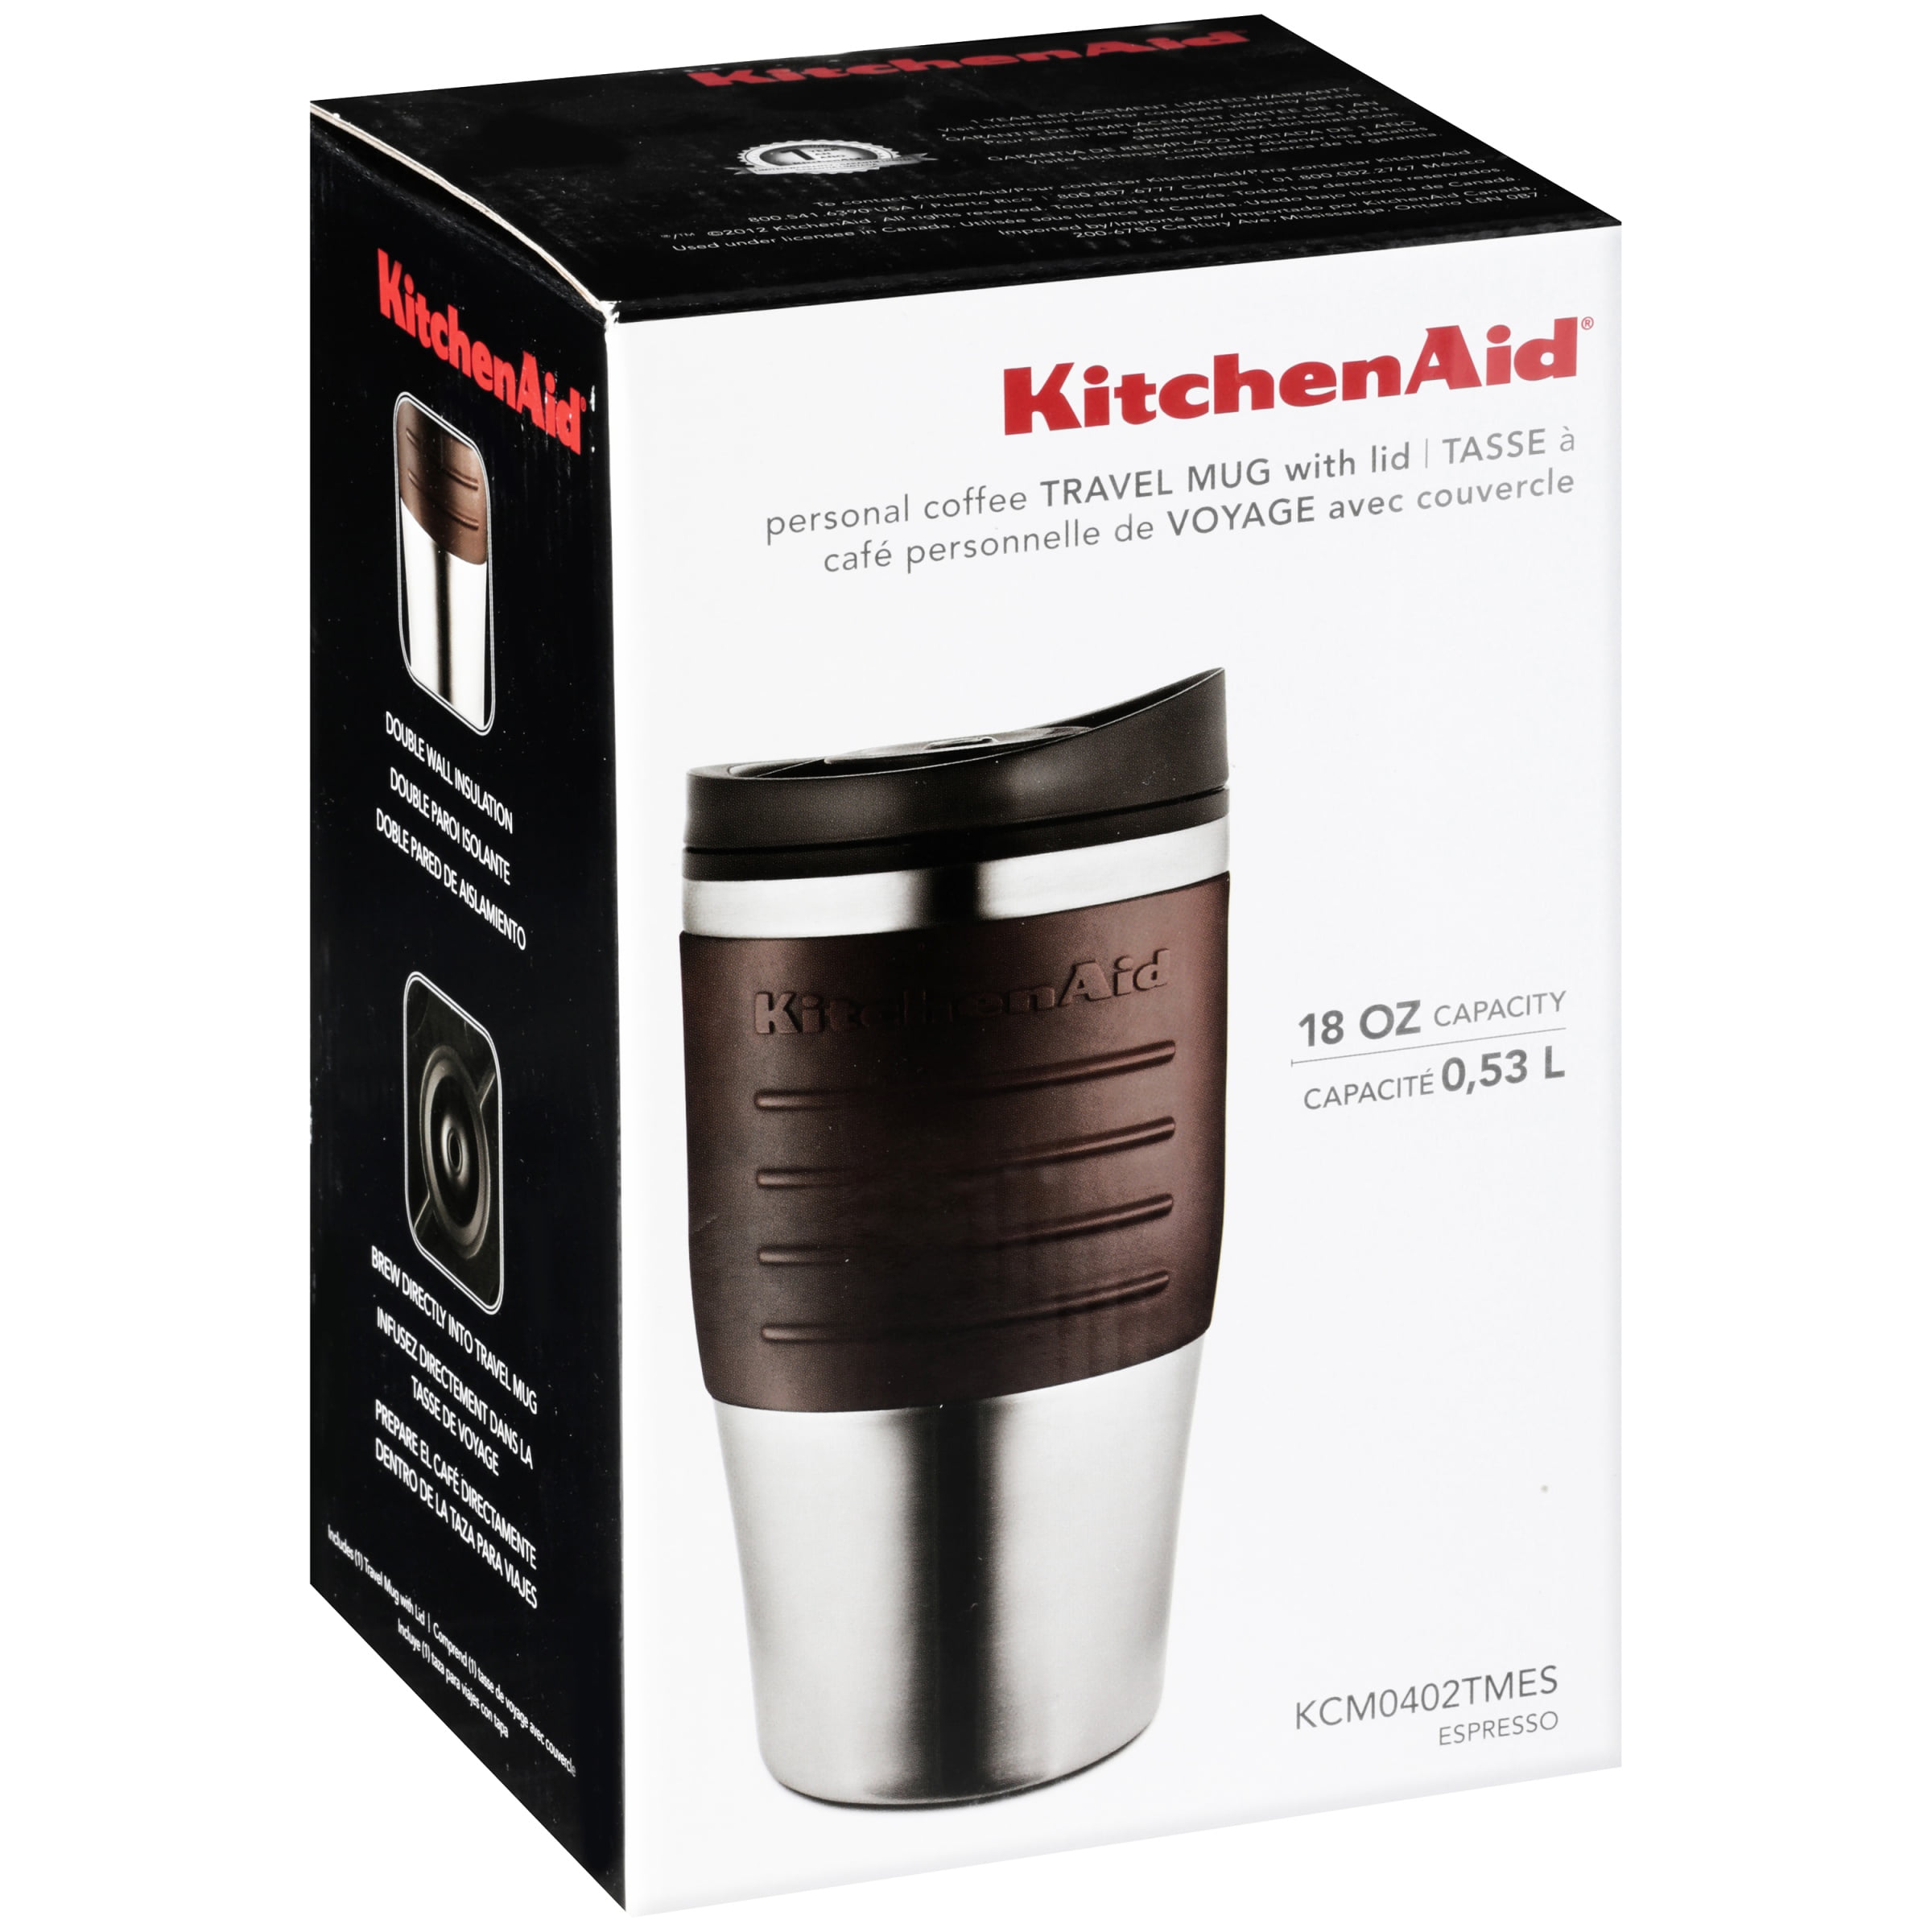 Tarifo - KitchenAid. Cafetera Personal. ✓ Mug personal 0.5 Lt